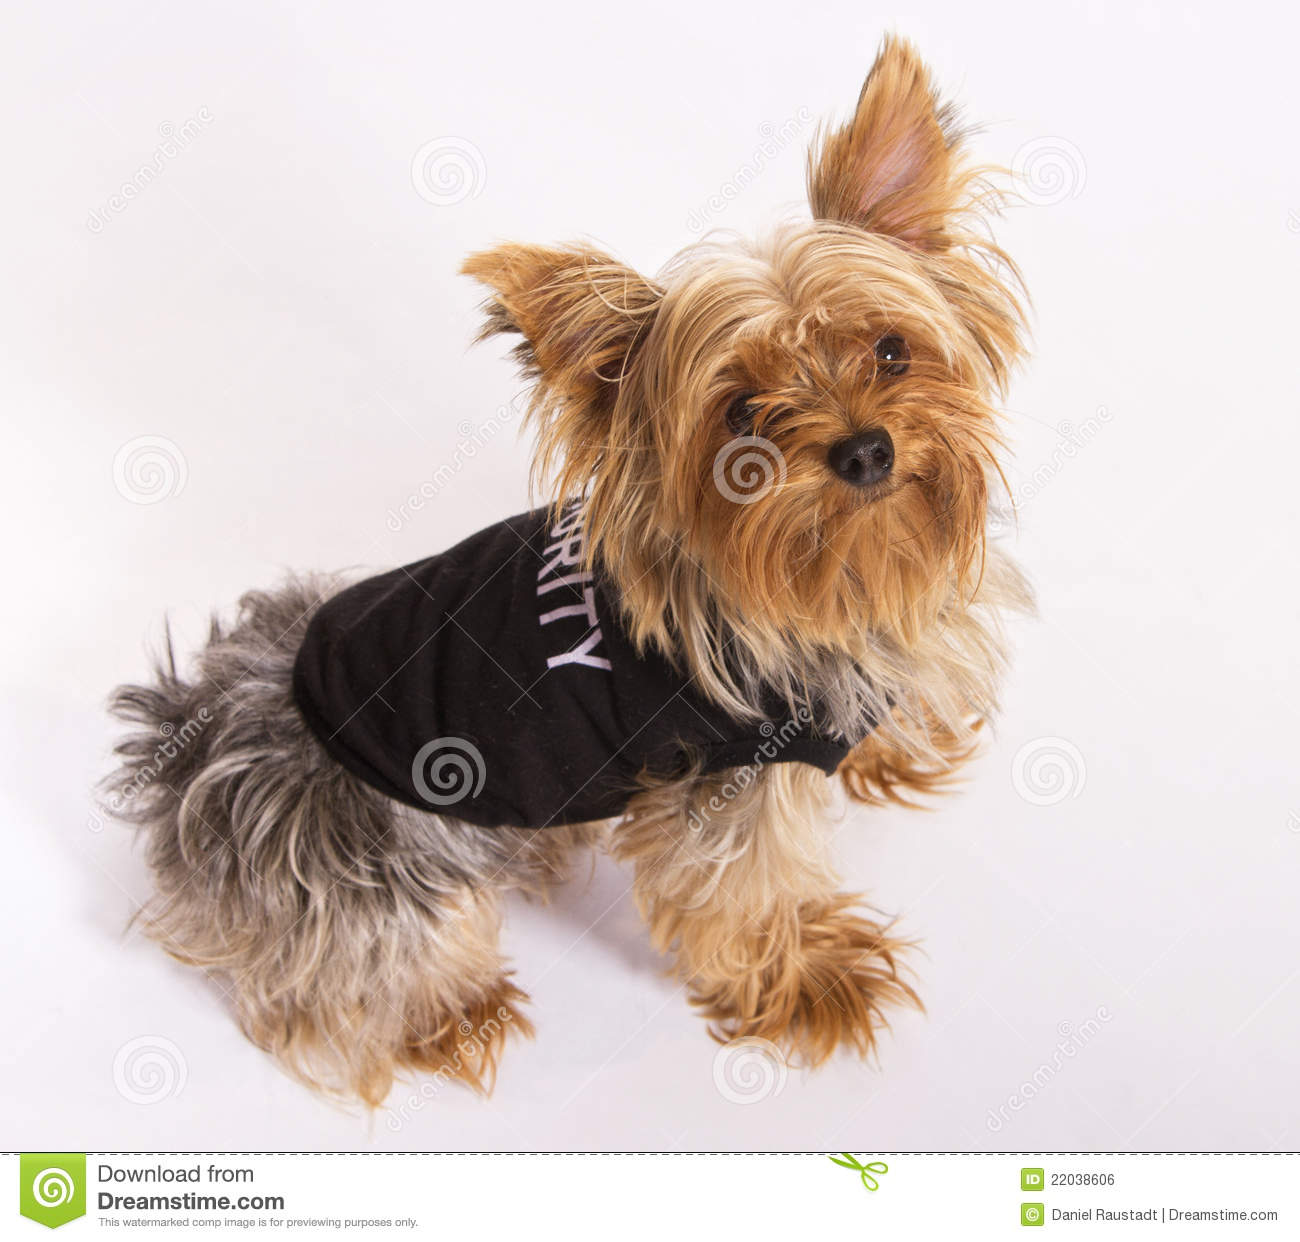 Male Yorkie Dog Pet Royalty Free Stock Image   Image  22038606